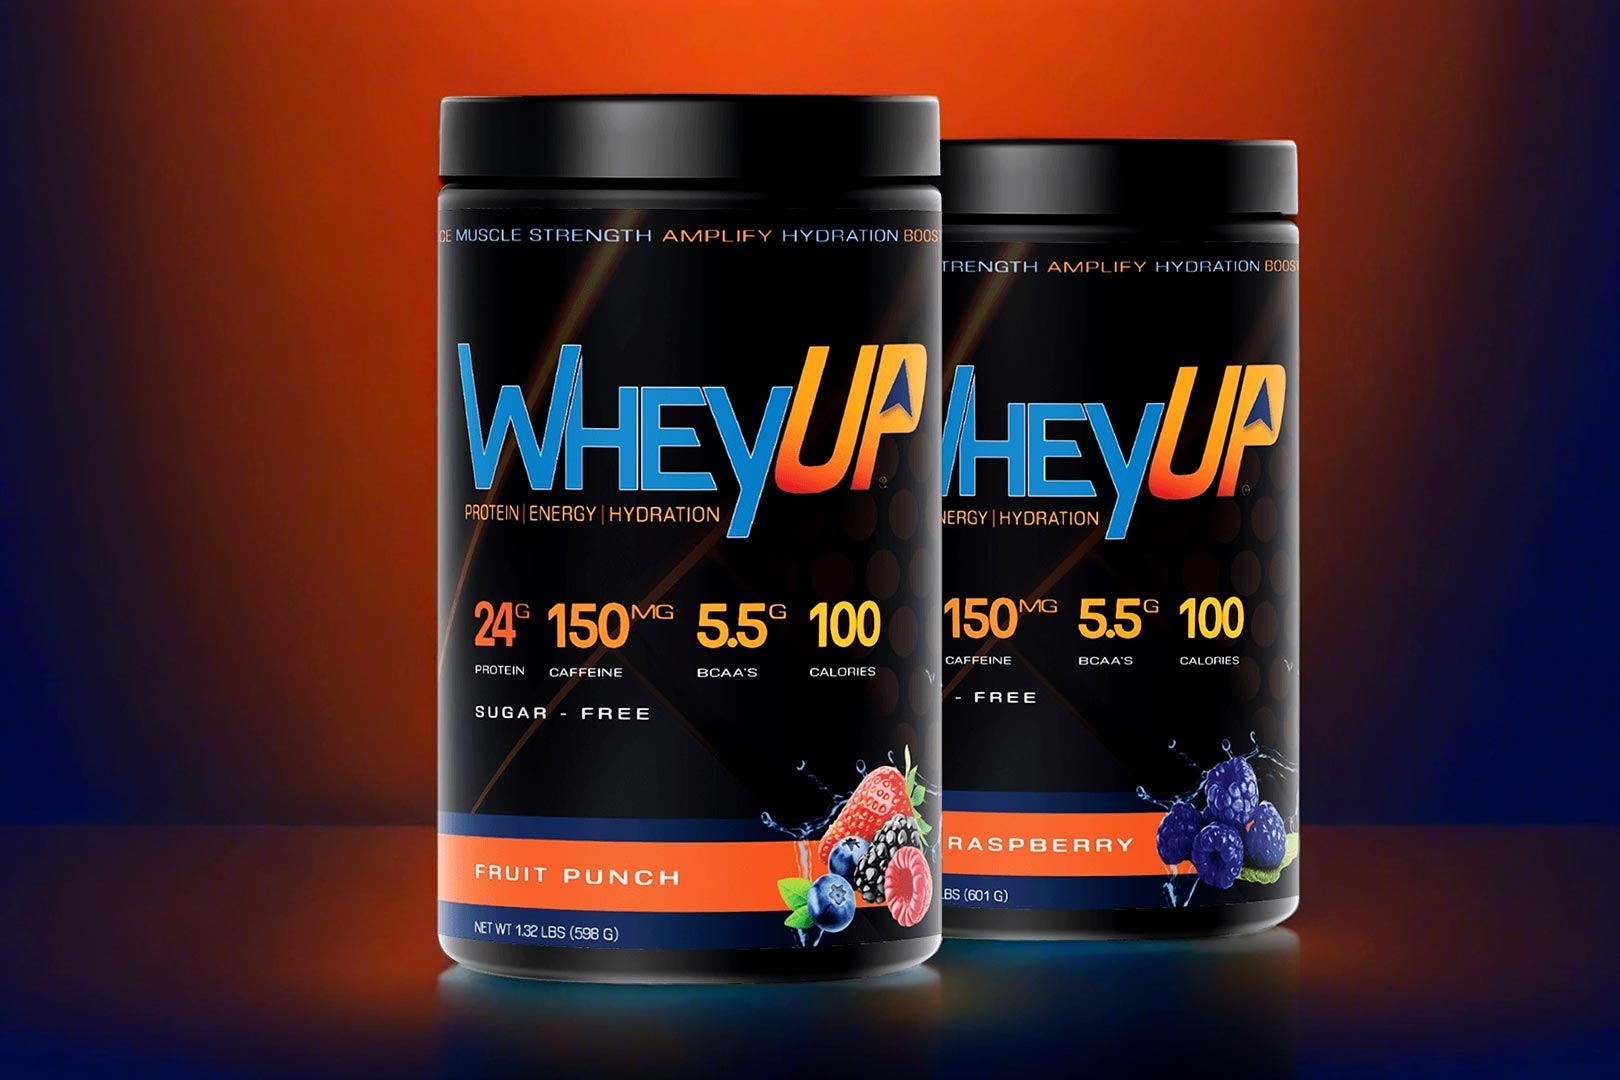 Introducing Wheyup Protein Powder